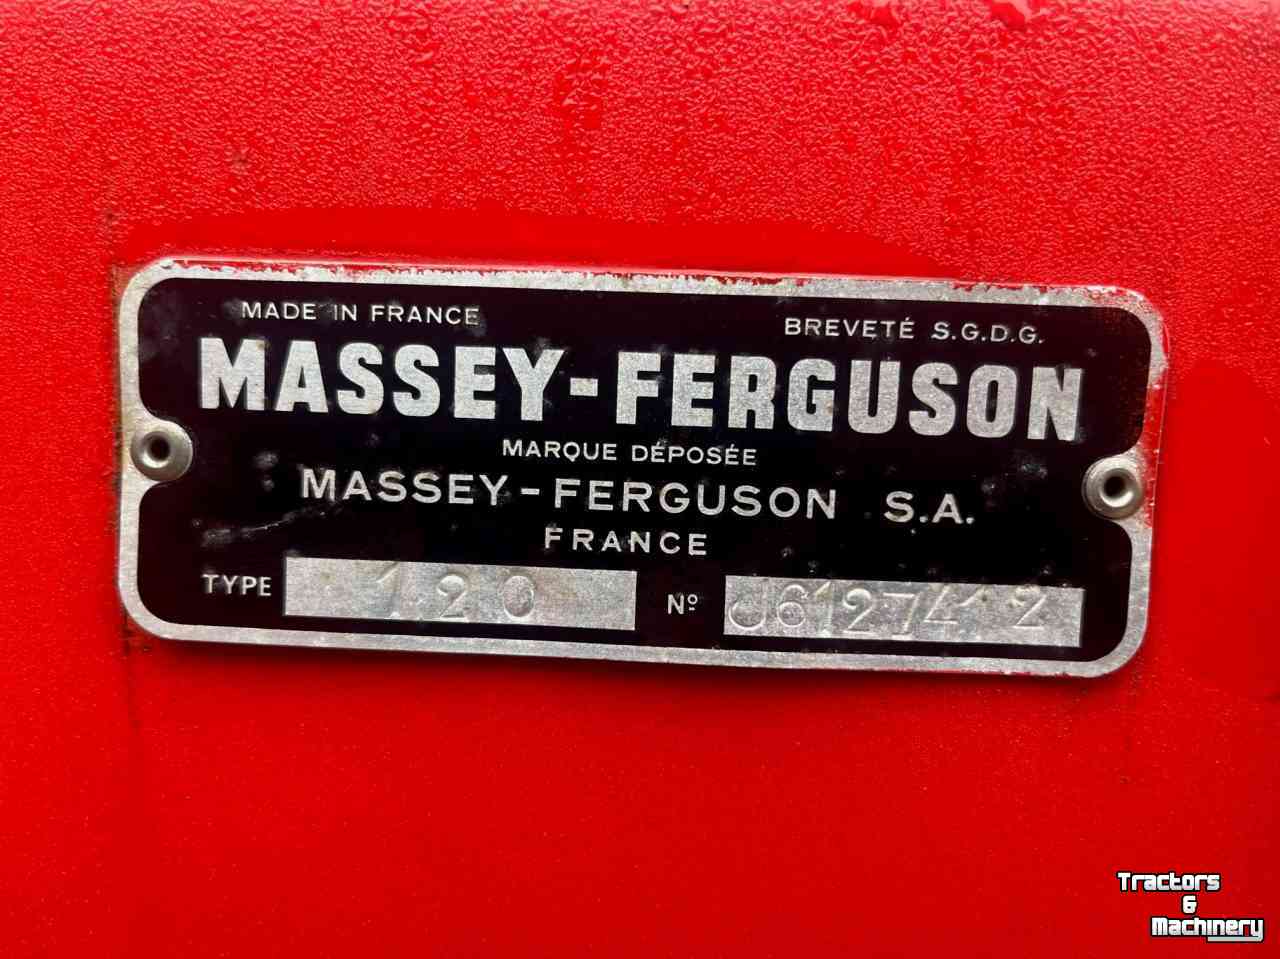 Persen Massey Ferguson 120